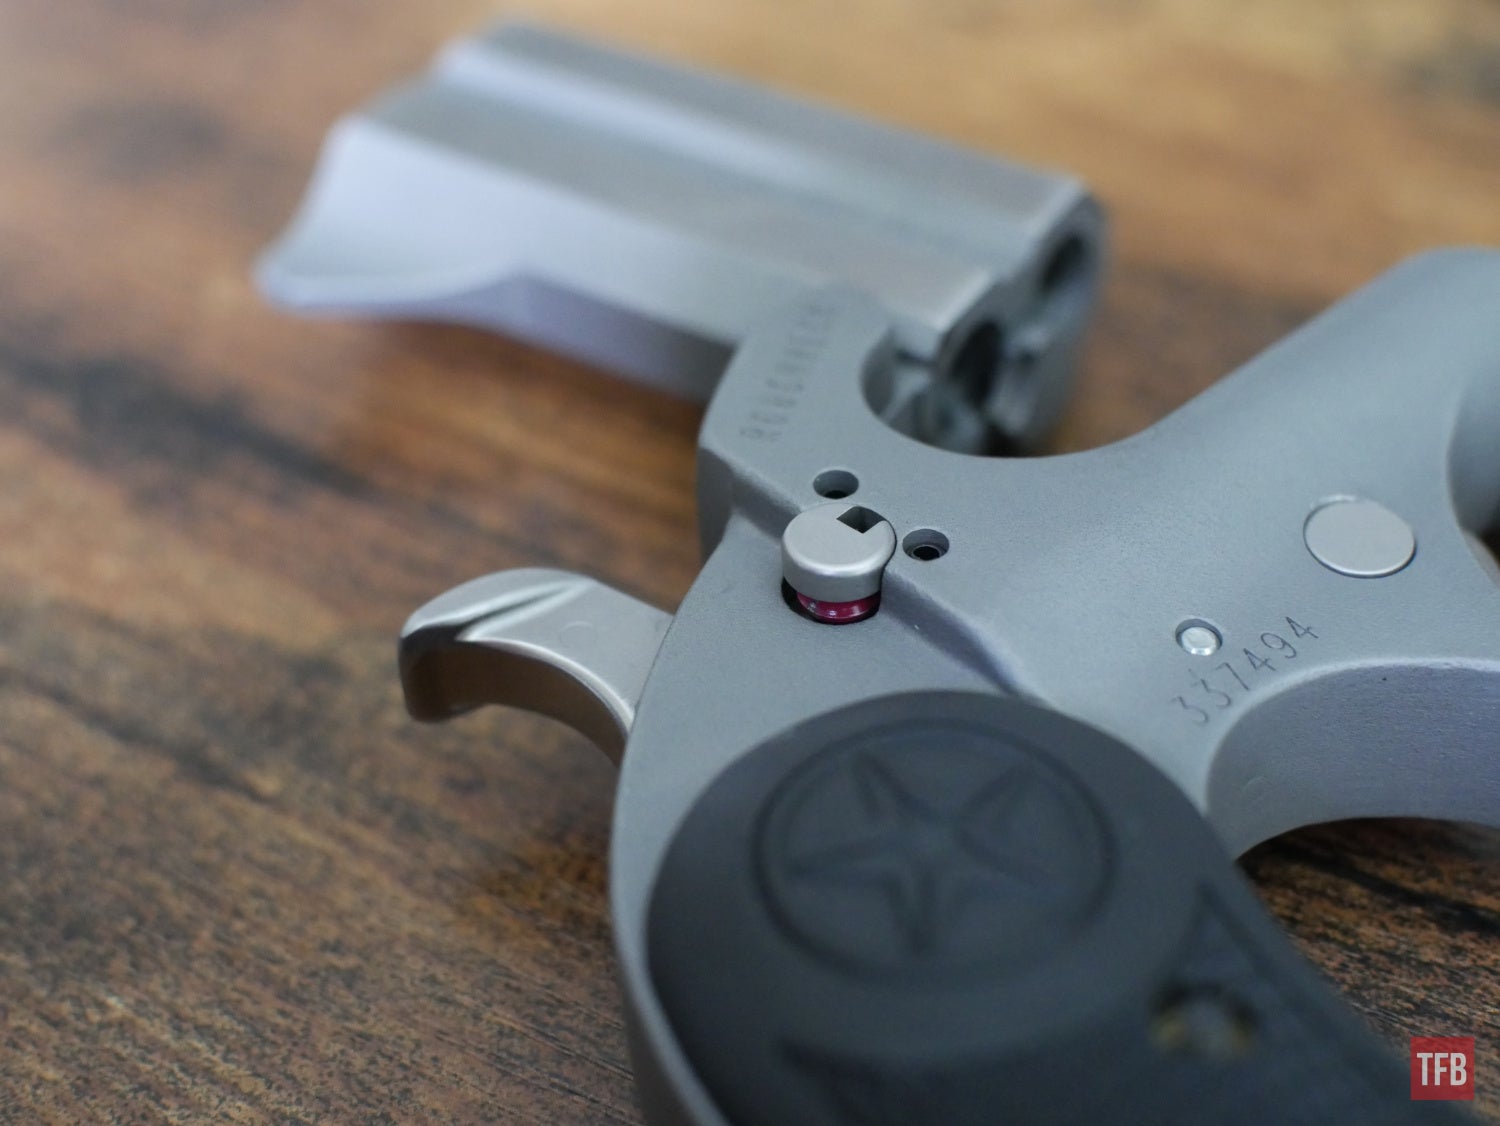 Pocket Full of Hate: The Bond Arms Roughneck Derringer Pistol